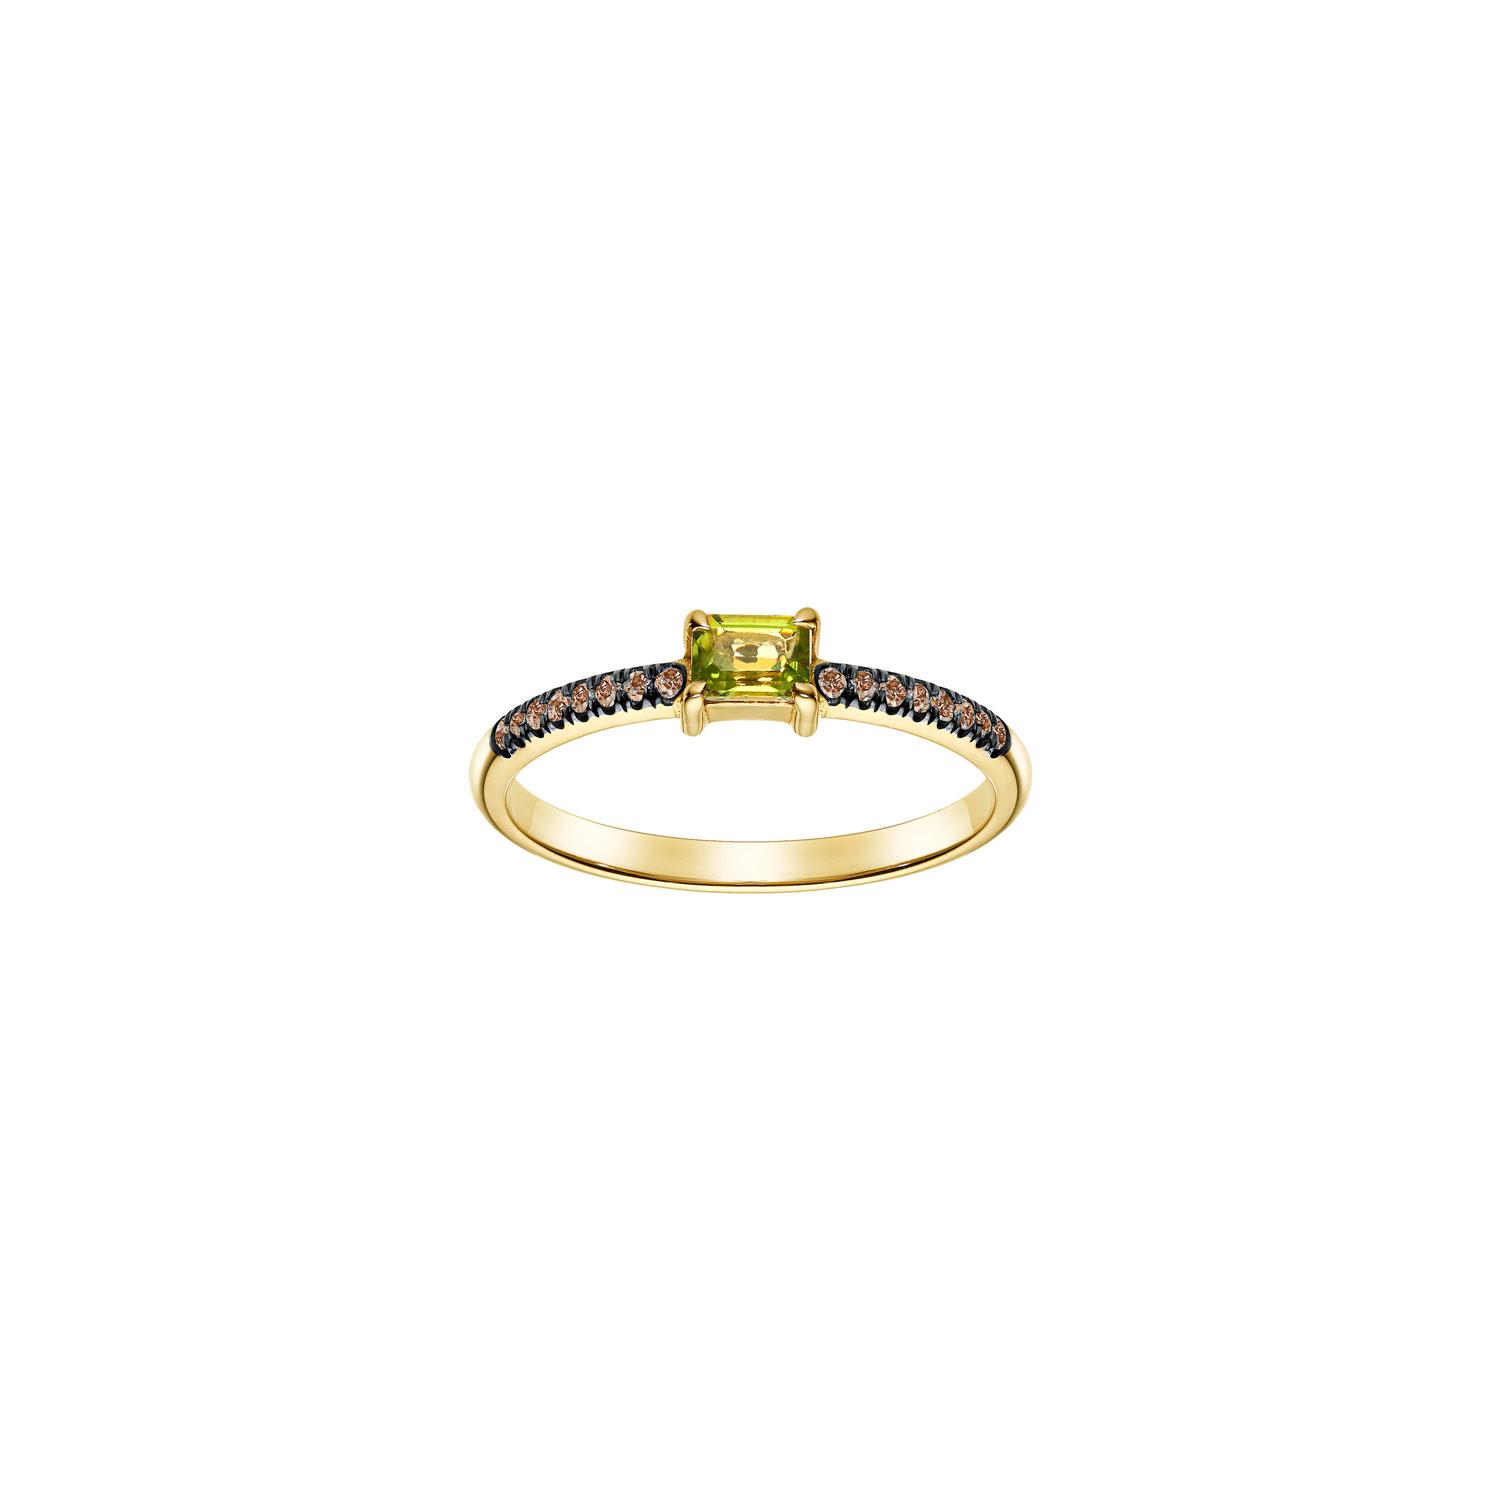 Ring Peridot braune Diamanten 18kt Gelbgold - Lefteris Margaritis - RMC001-perbrd